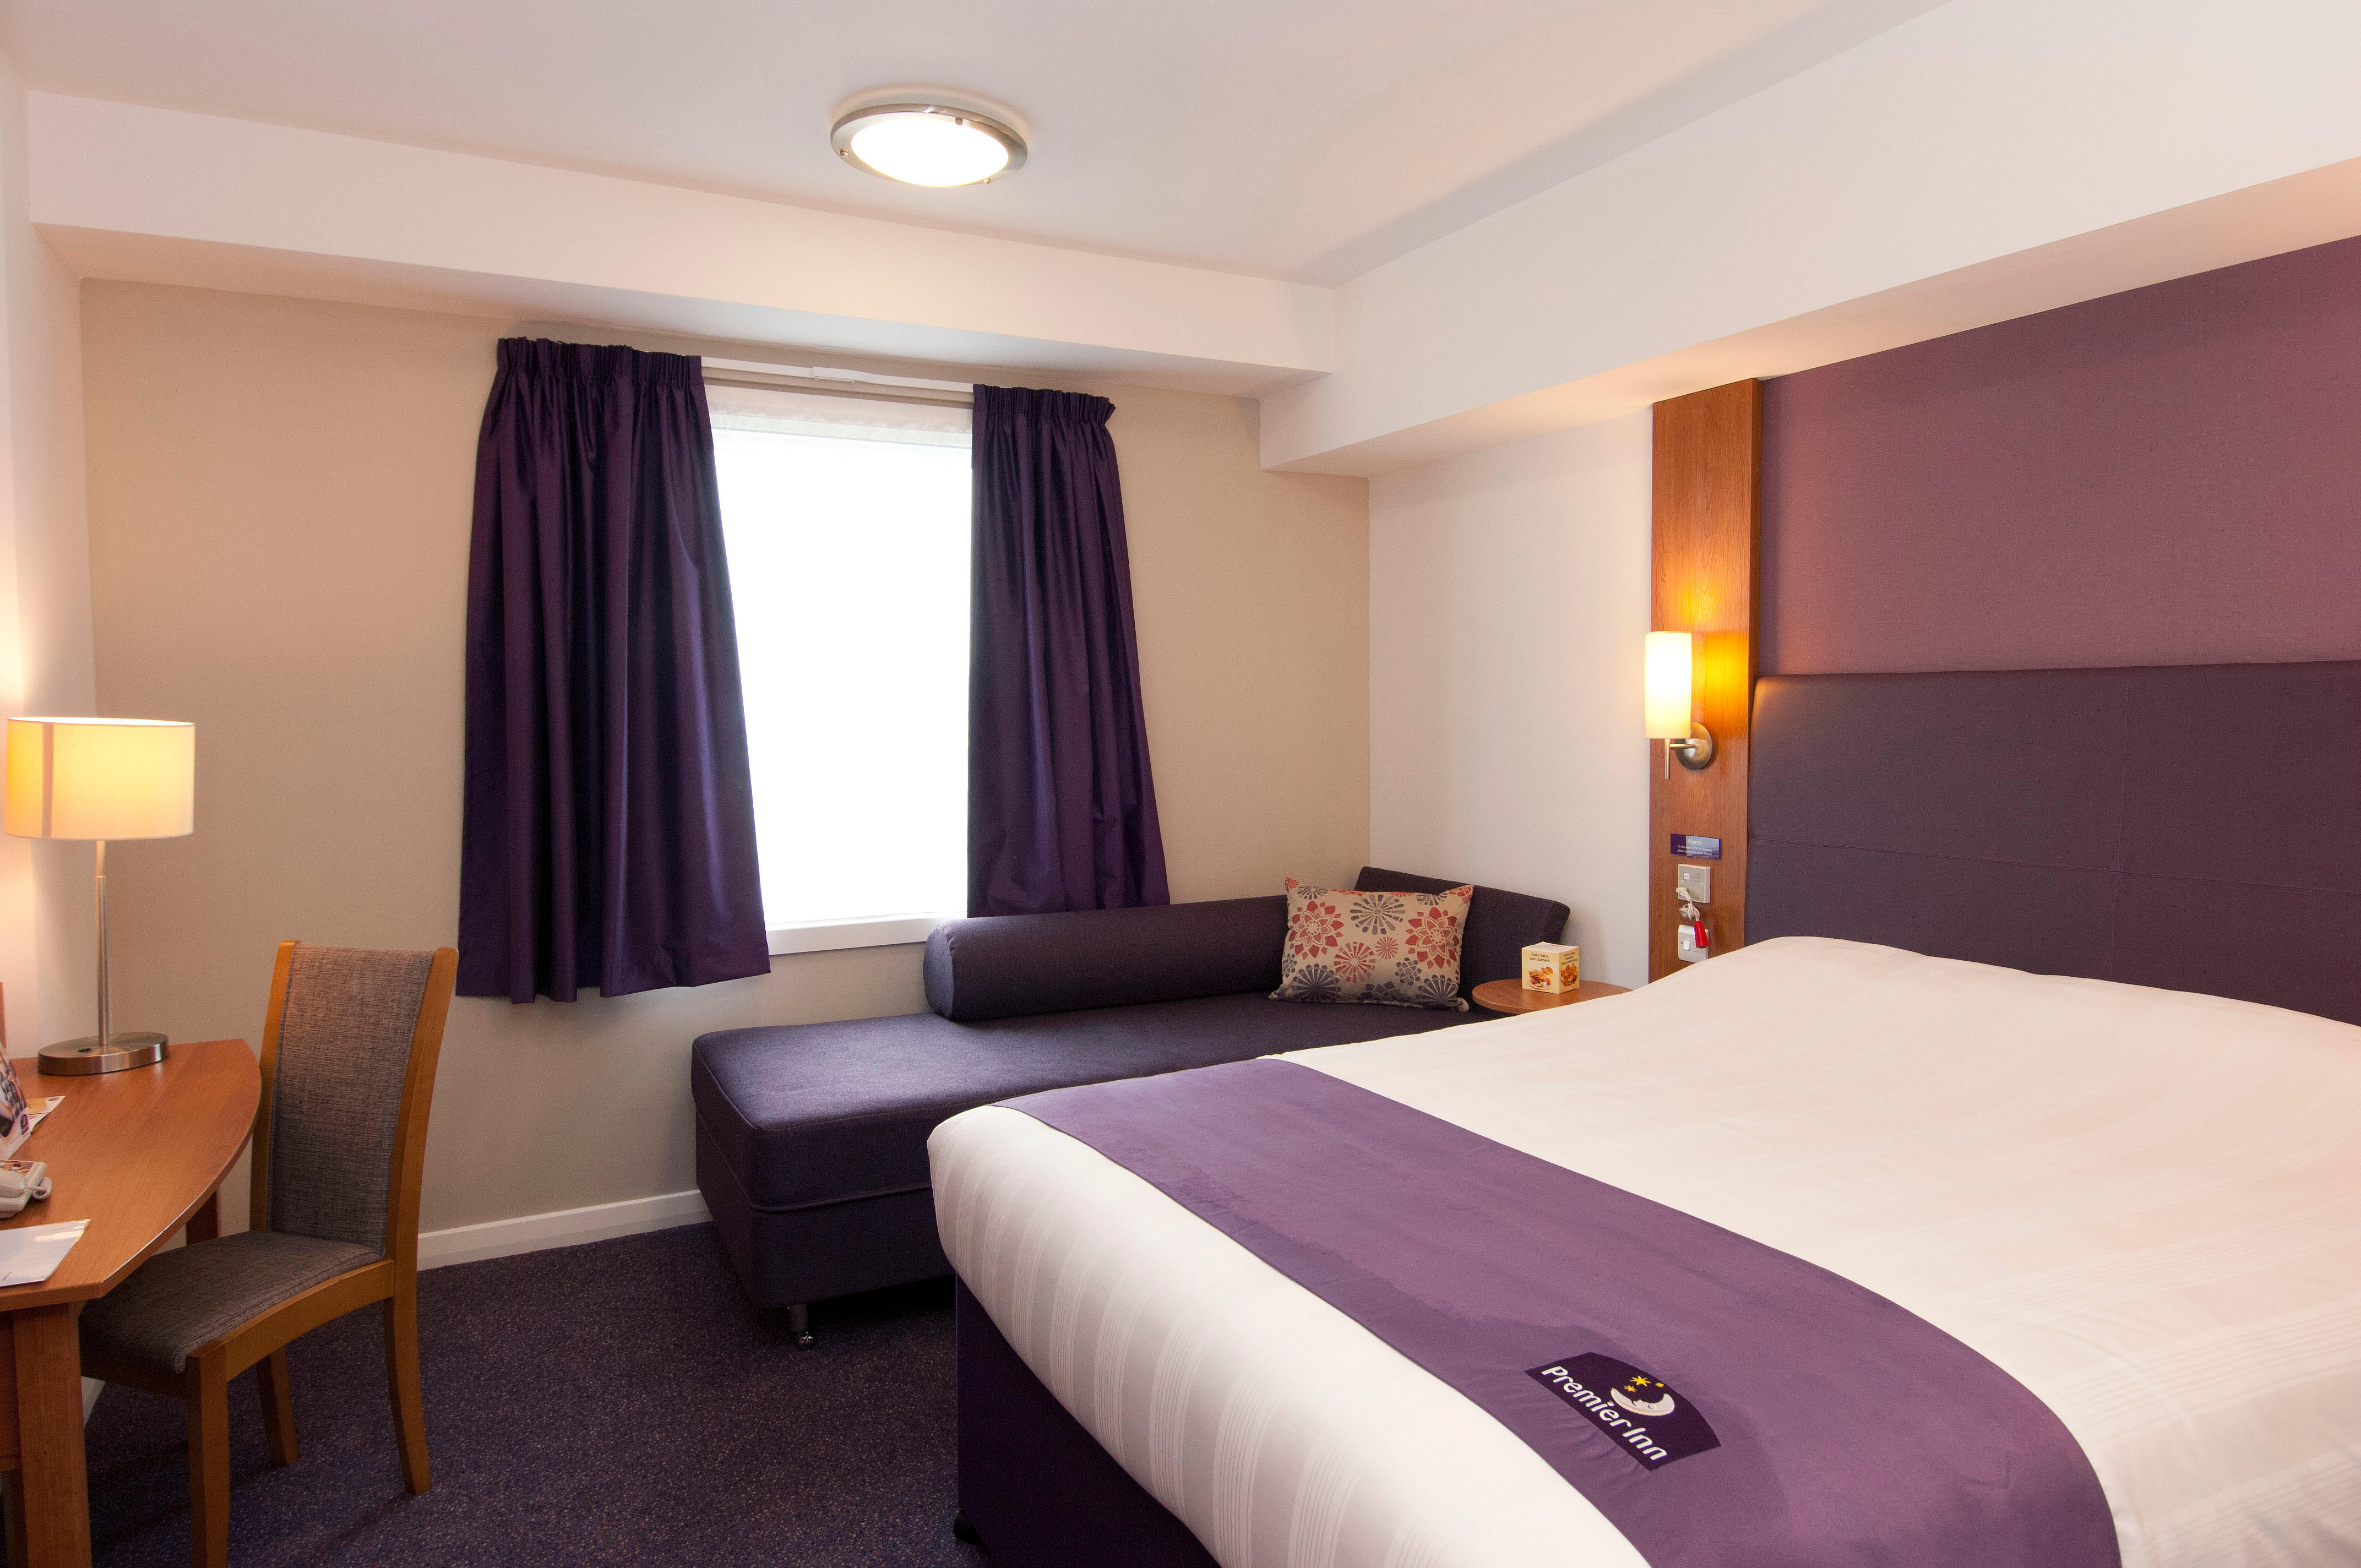 Premier Inn bedroom Premier Inn London Heathrow Airport Terminal 5 hotel Longford 08715 279344